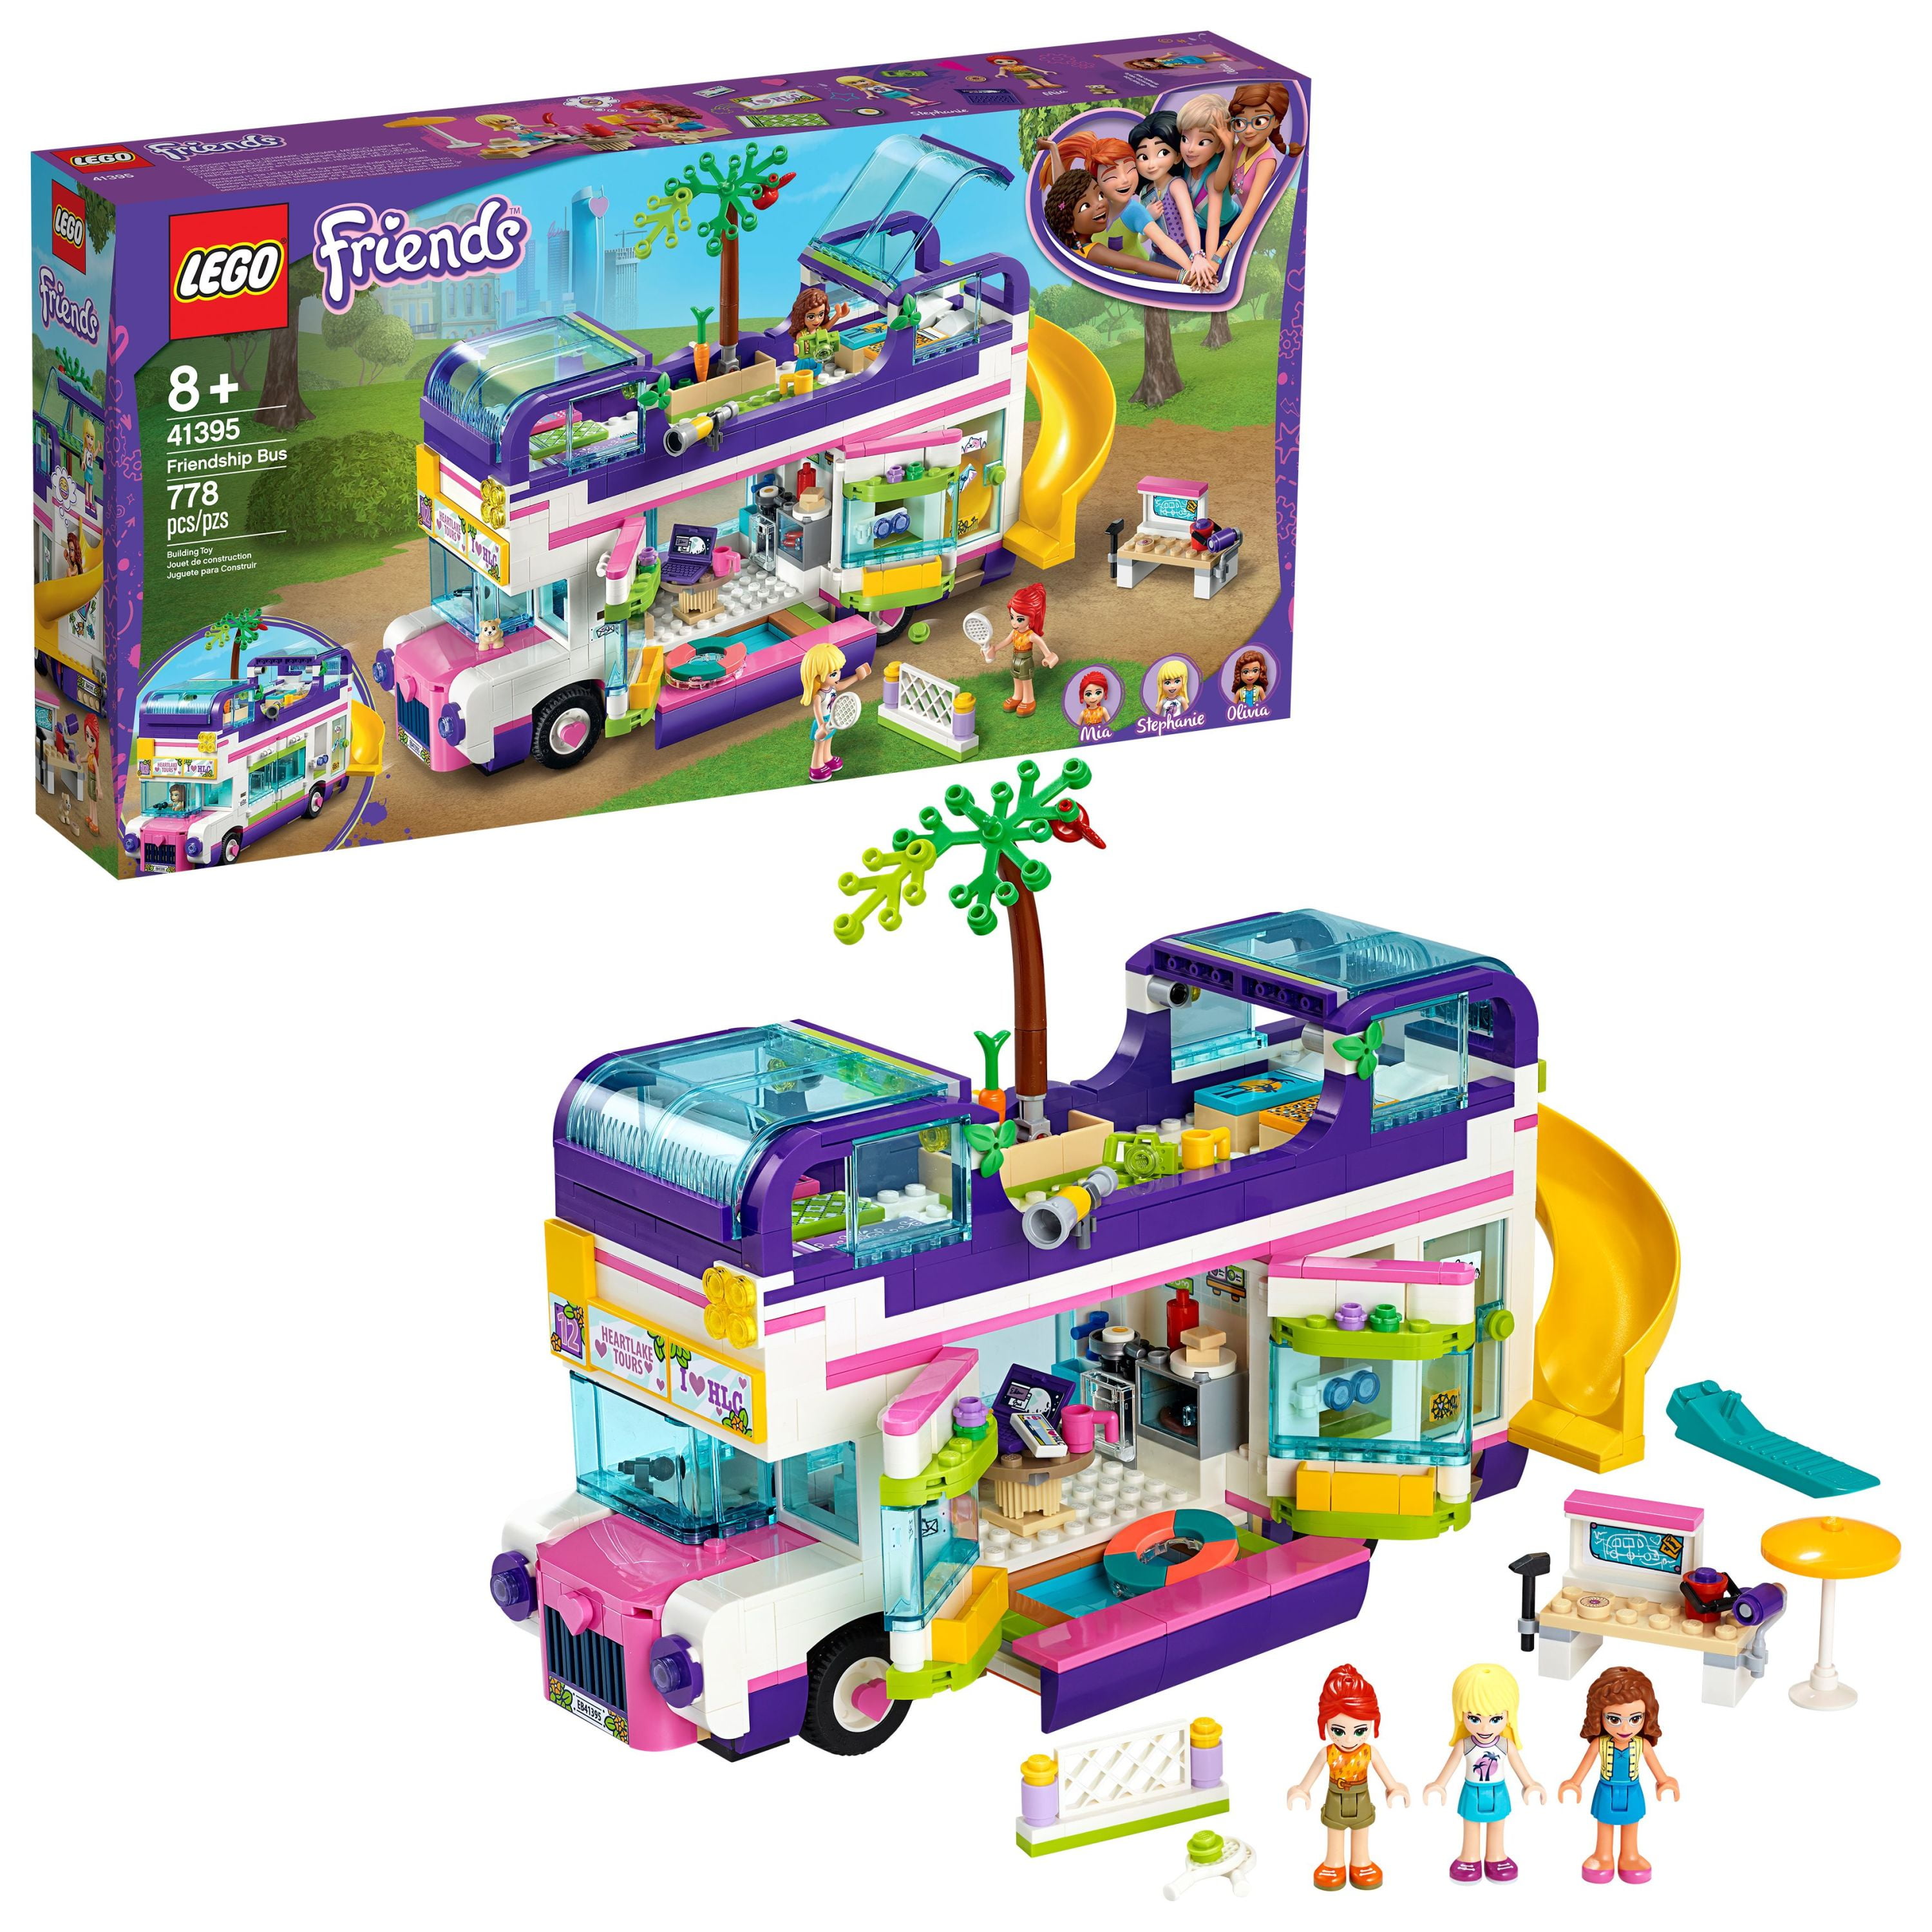 LEGO Friends Friendship Bus 41395 LEGO Heartlake City Playset Pieces) - Walmart.com